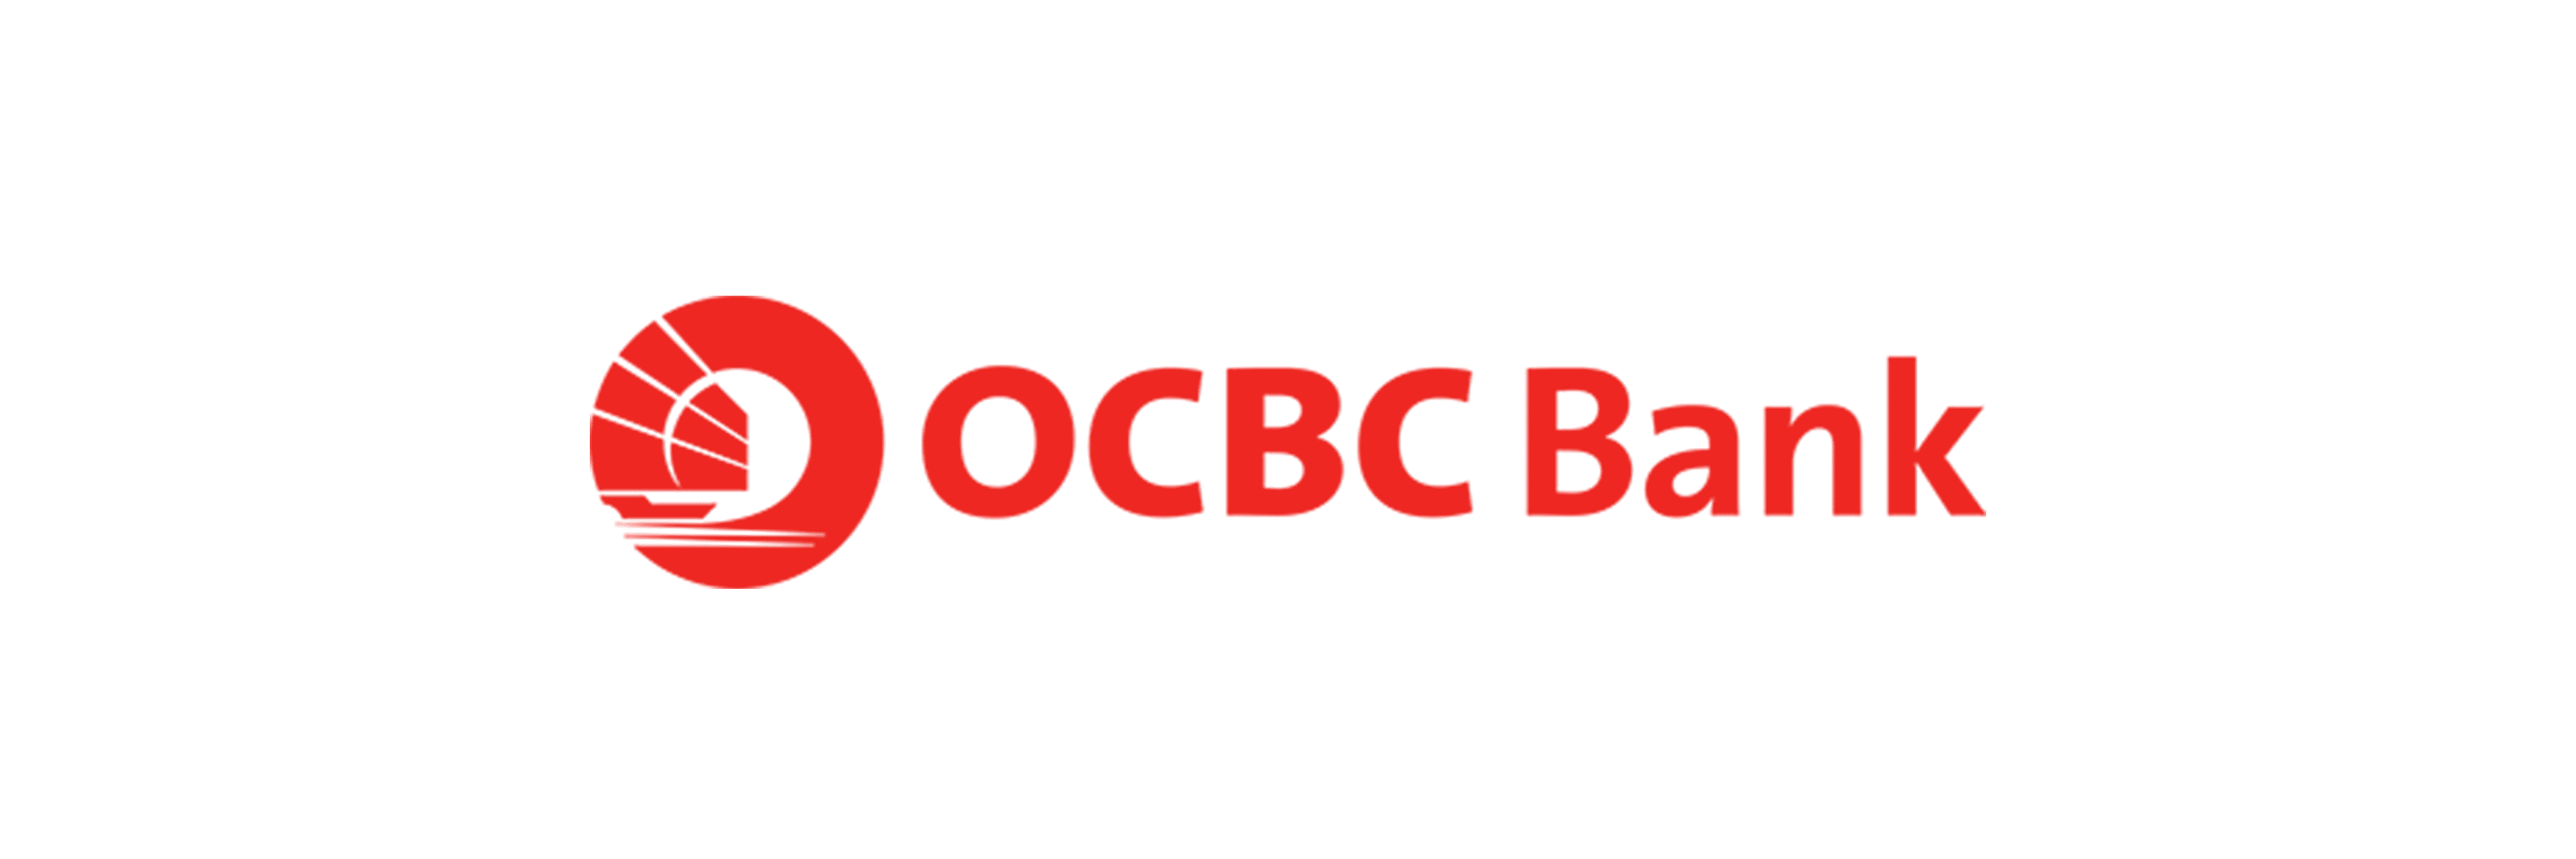 OCBC logo V1 - Instalment Plans